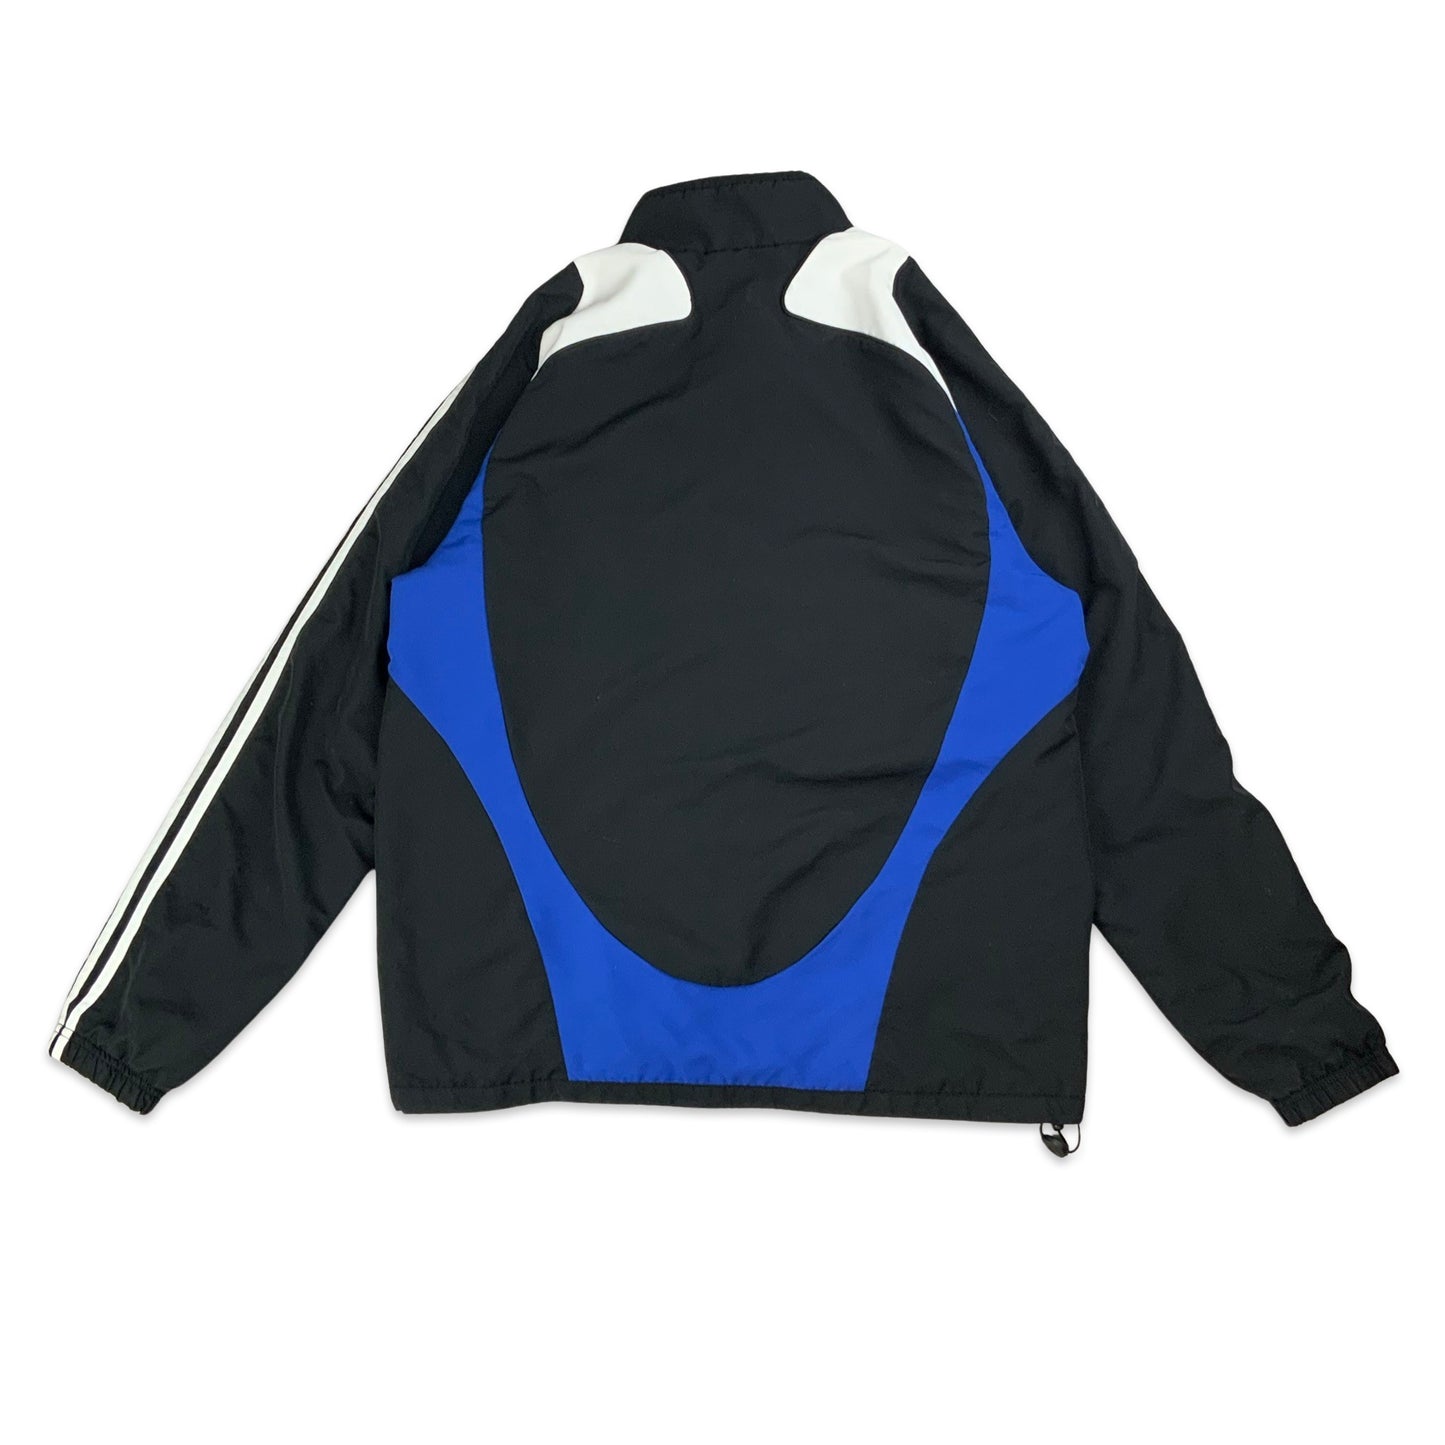 Preloved Adidas Chelsea FC Track Jacket M L